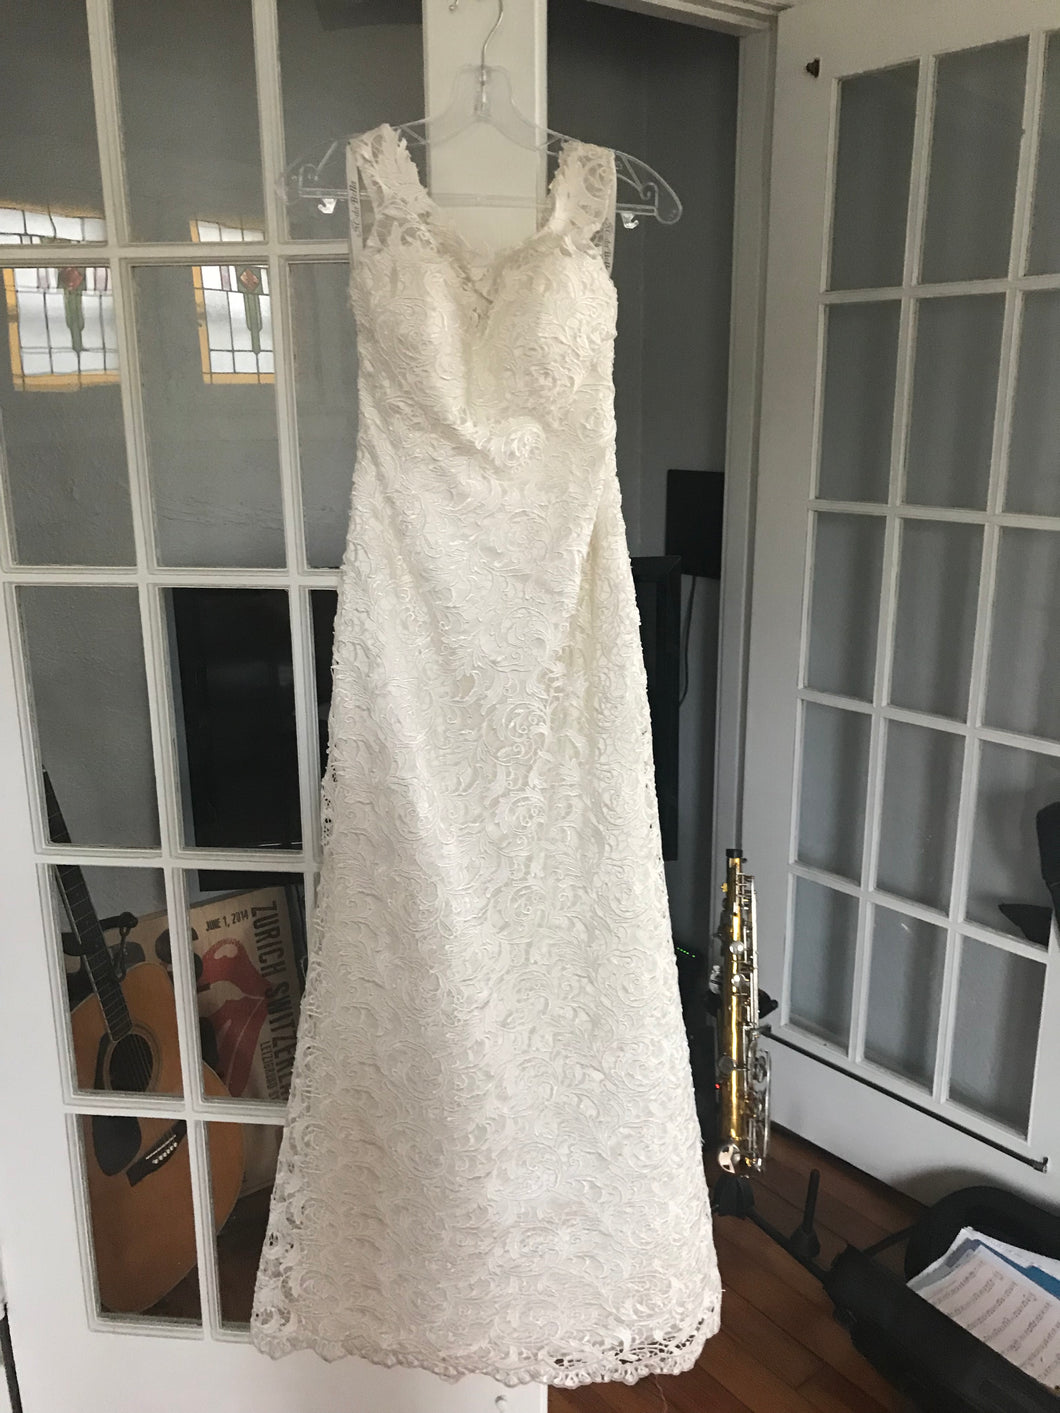 Custom 'DK' size 10 new wedding dress front view on hanger